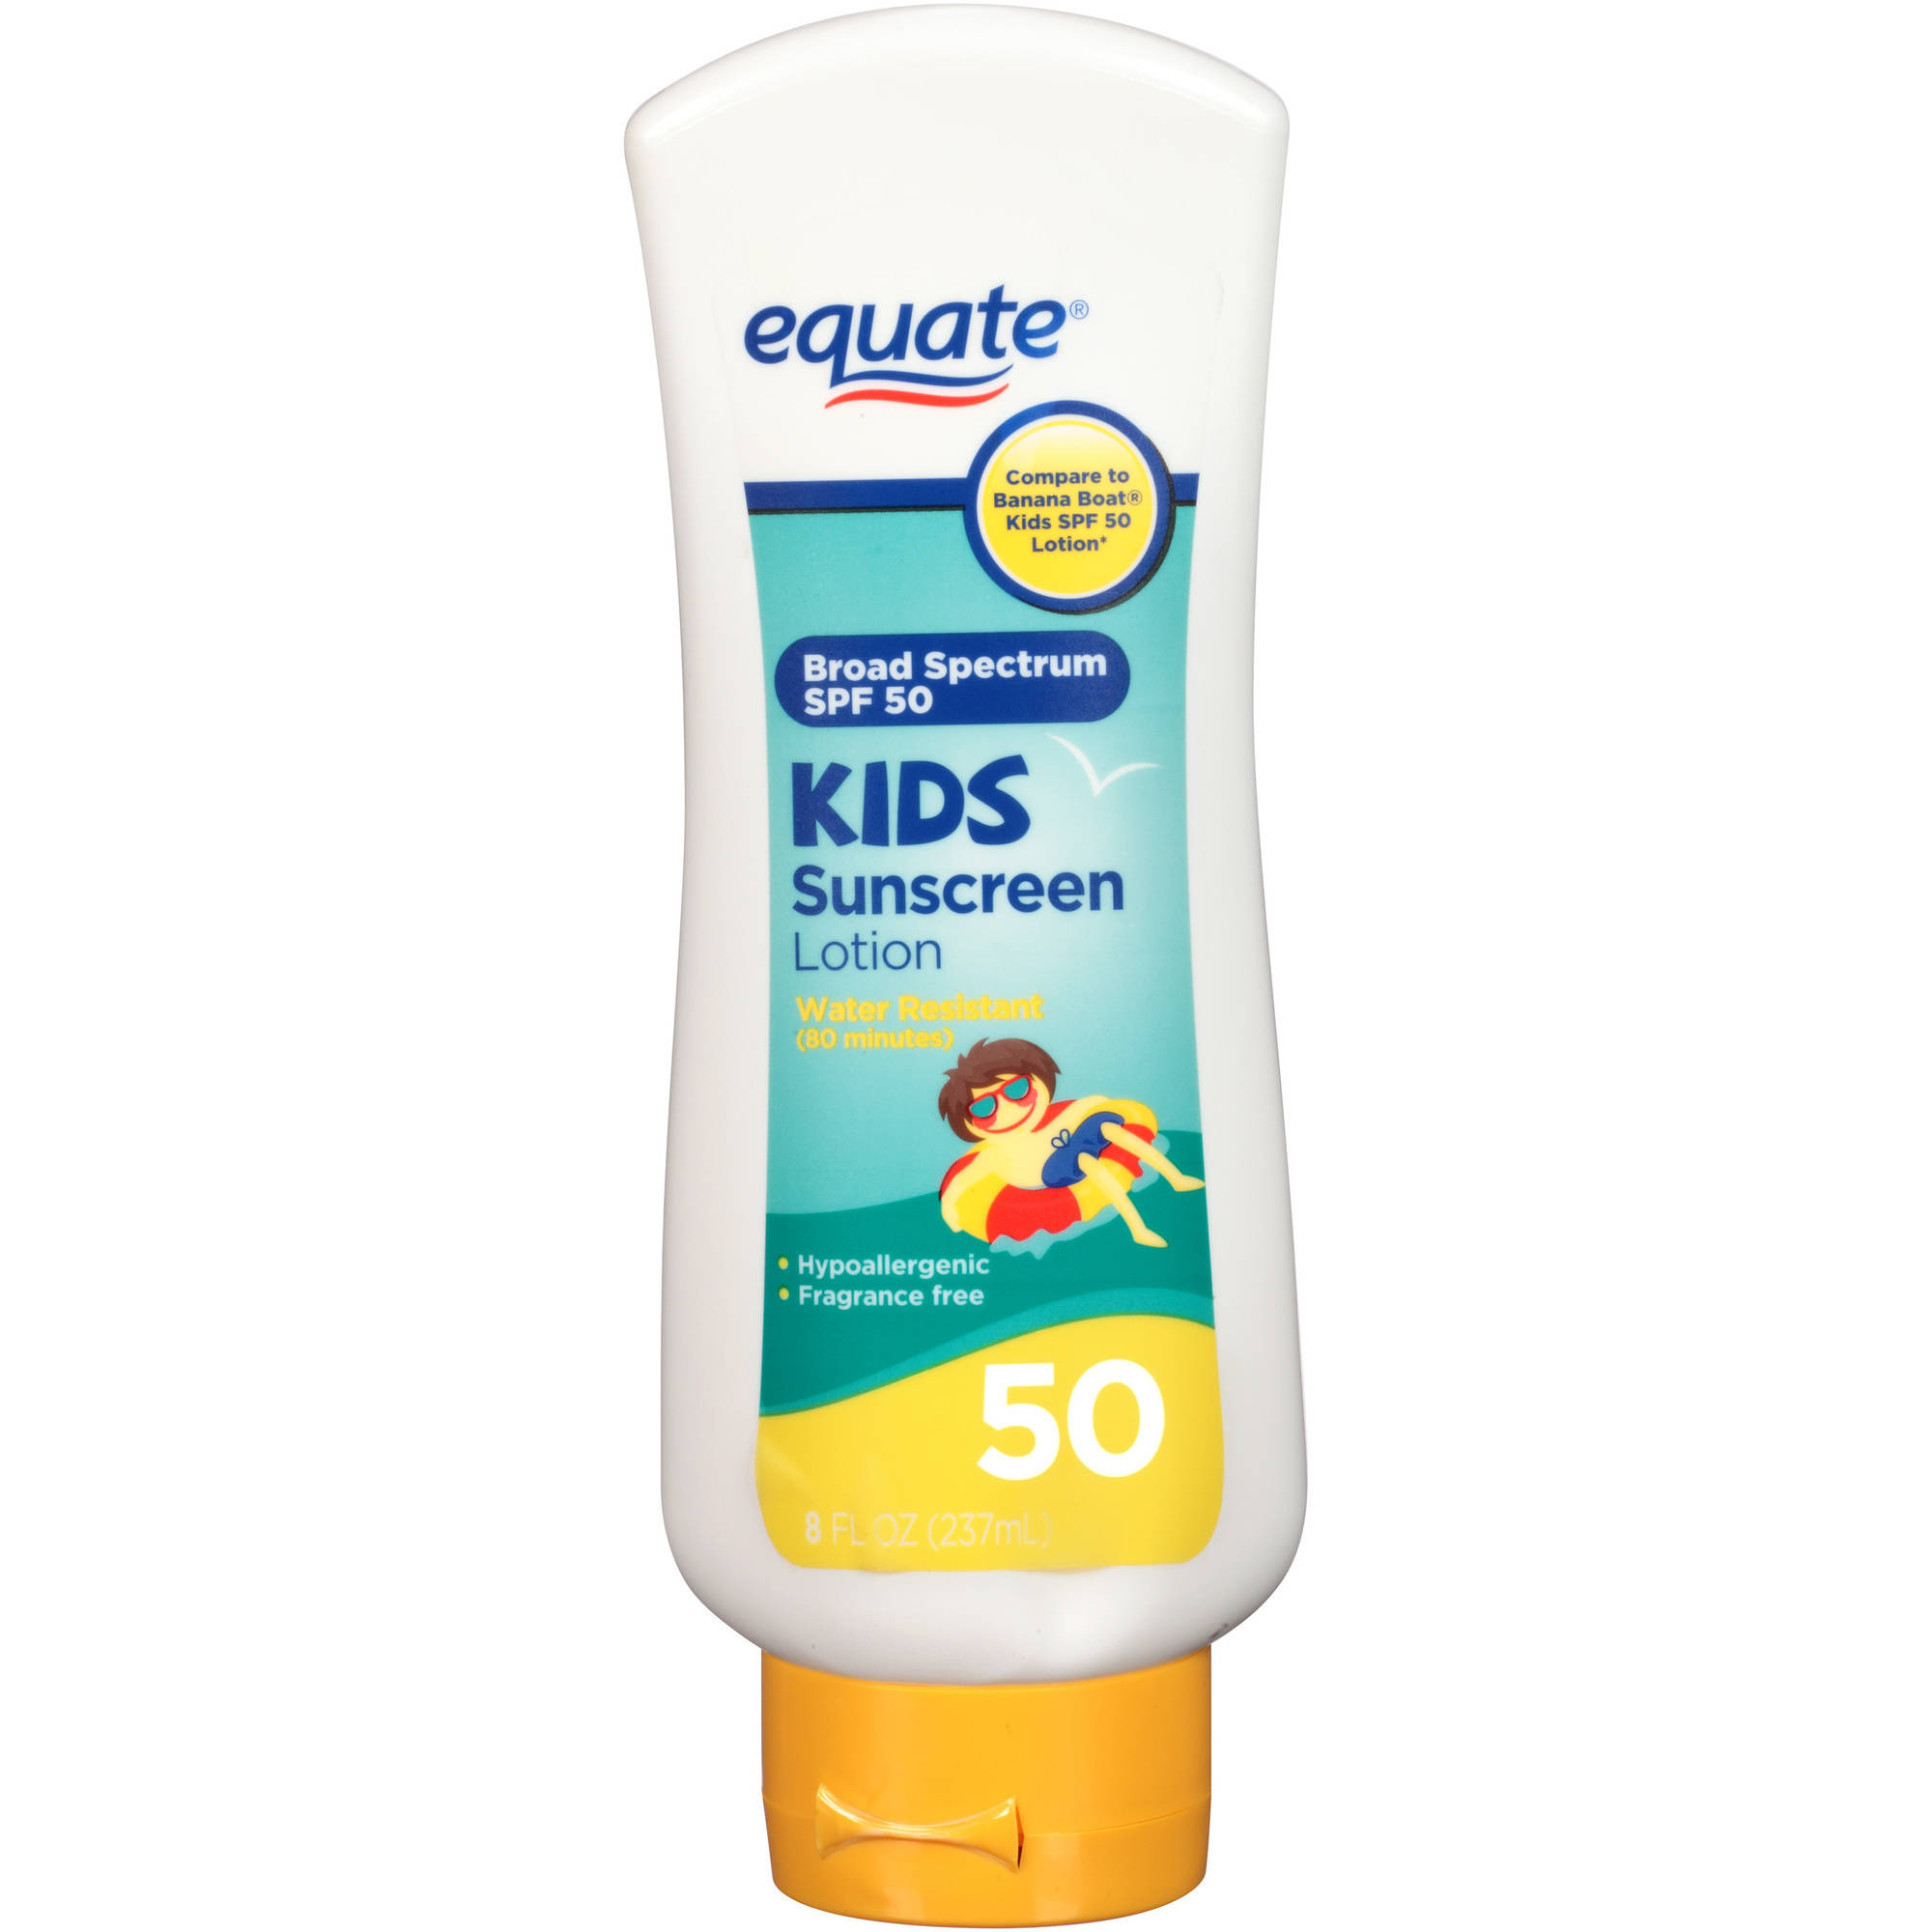 Equate Kids Sunscreen Lotion, SPF 50, 8 fl oz - image 1 of 3